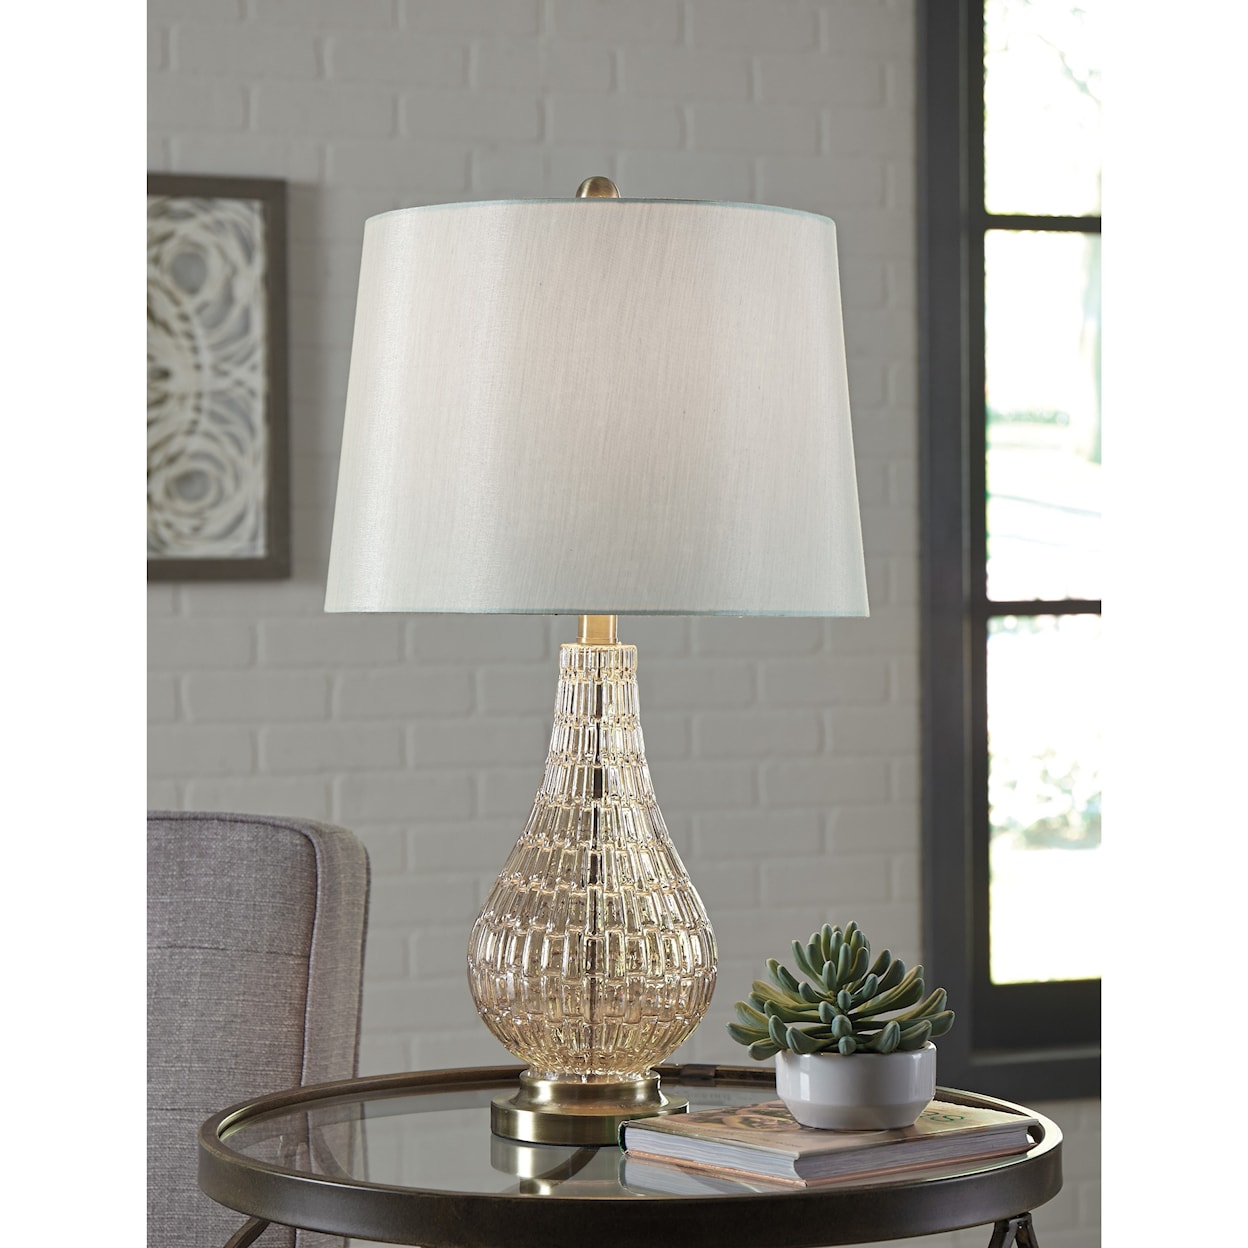 Ashley Furniture Signature Design Lamps - Contemporary Latoya Glass Table Lamp